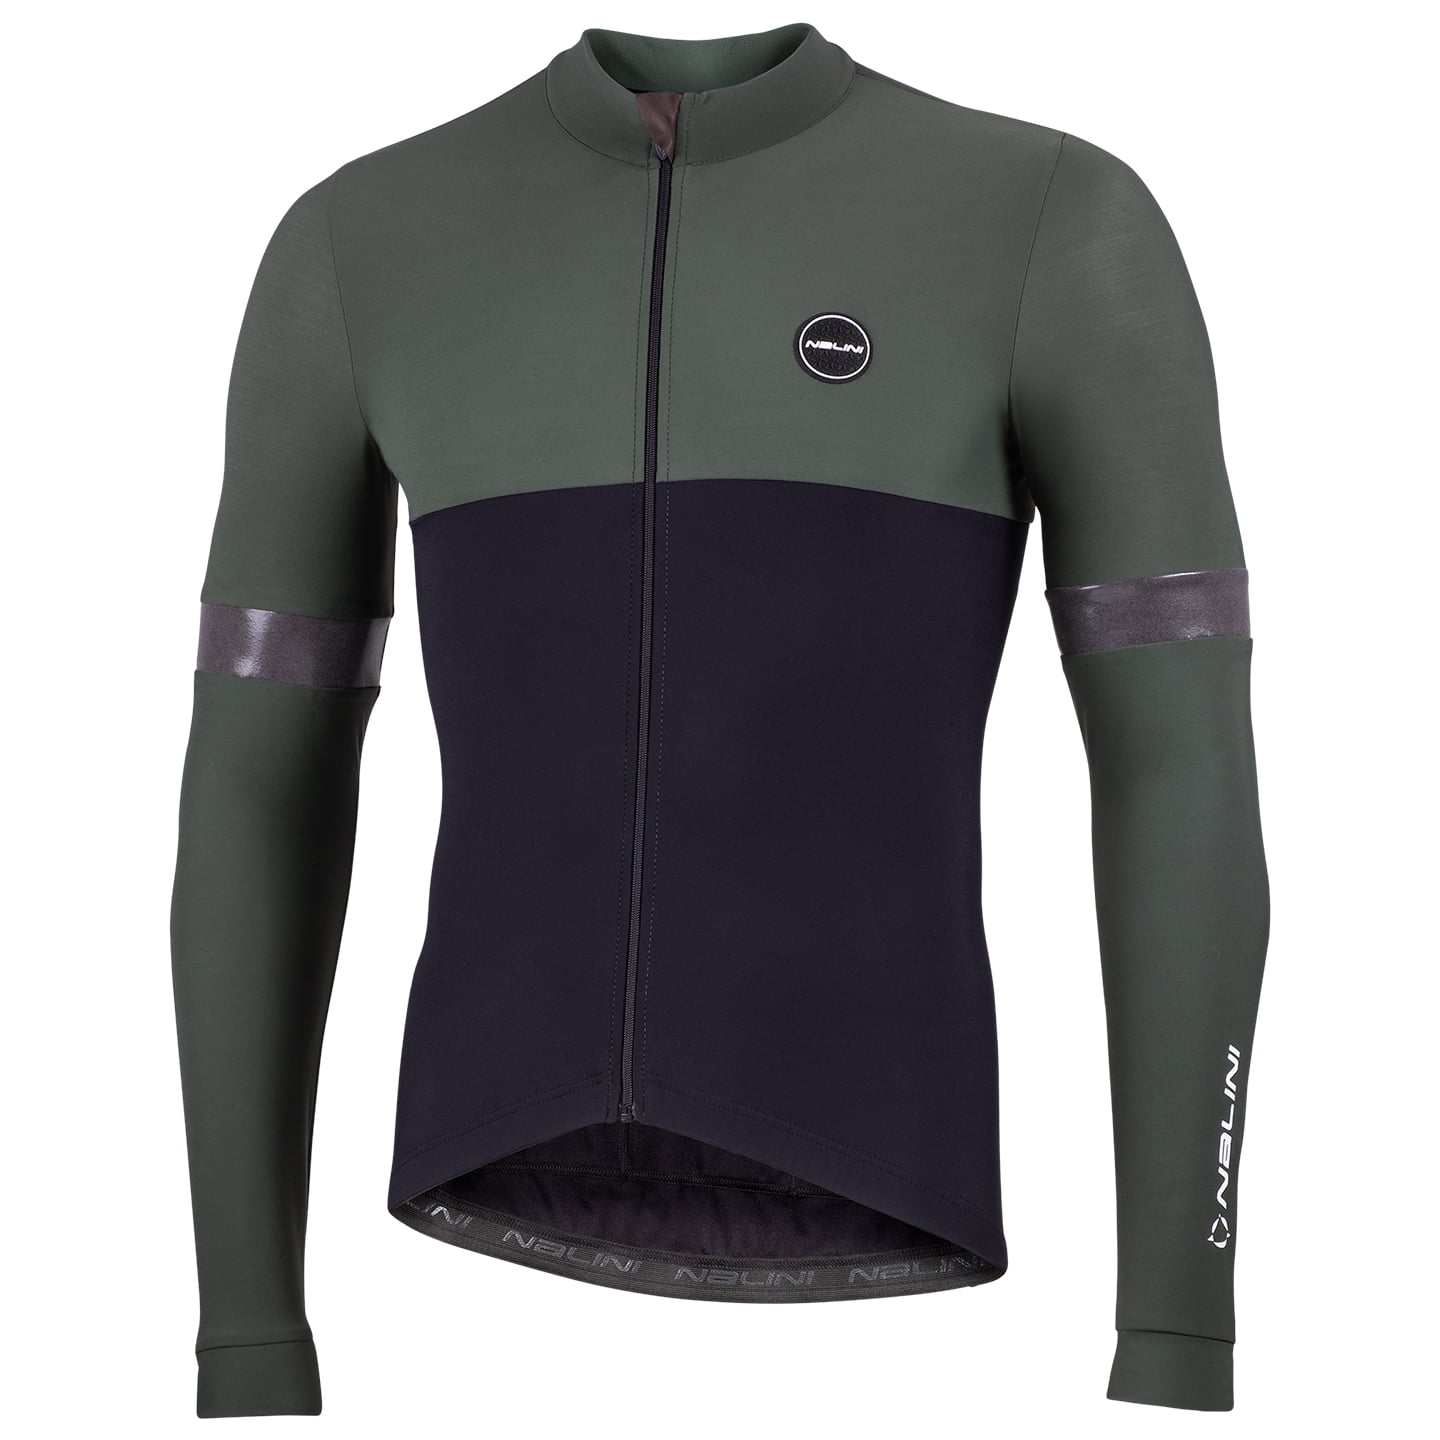 NALINI Warm Wrap Long Sleeve Jersey, for men, size 3XL, Cycling jersey, Cycle clothing